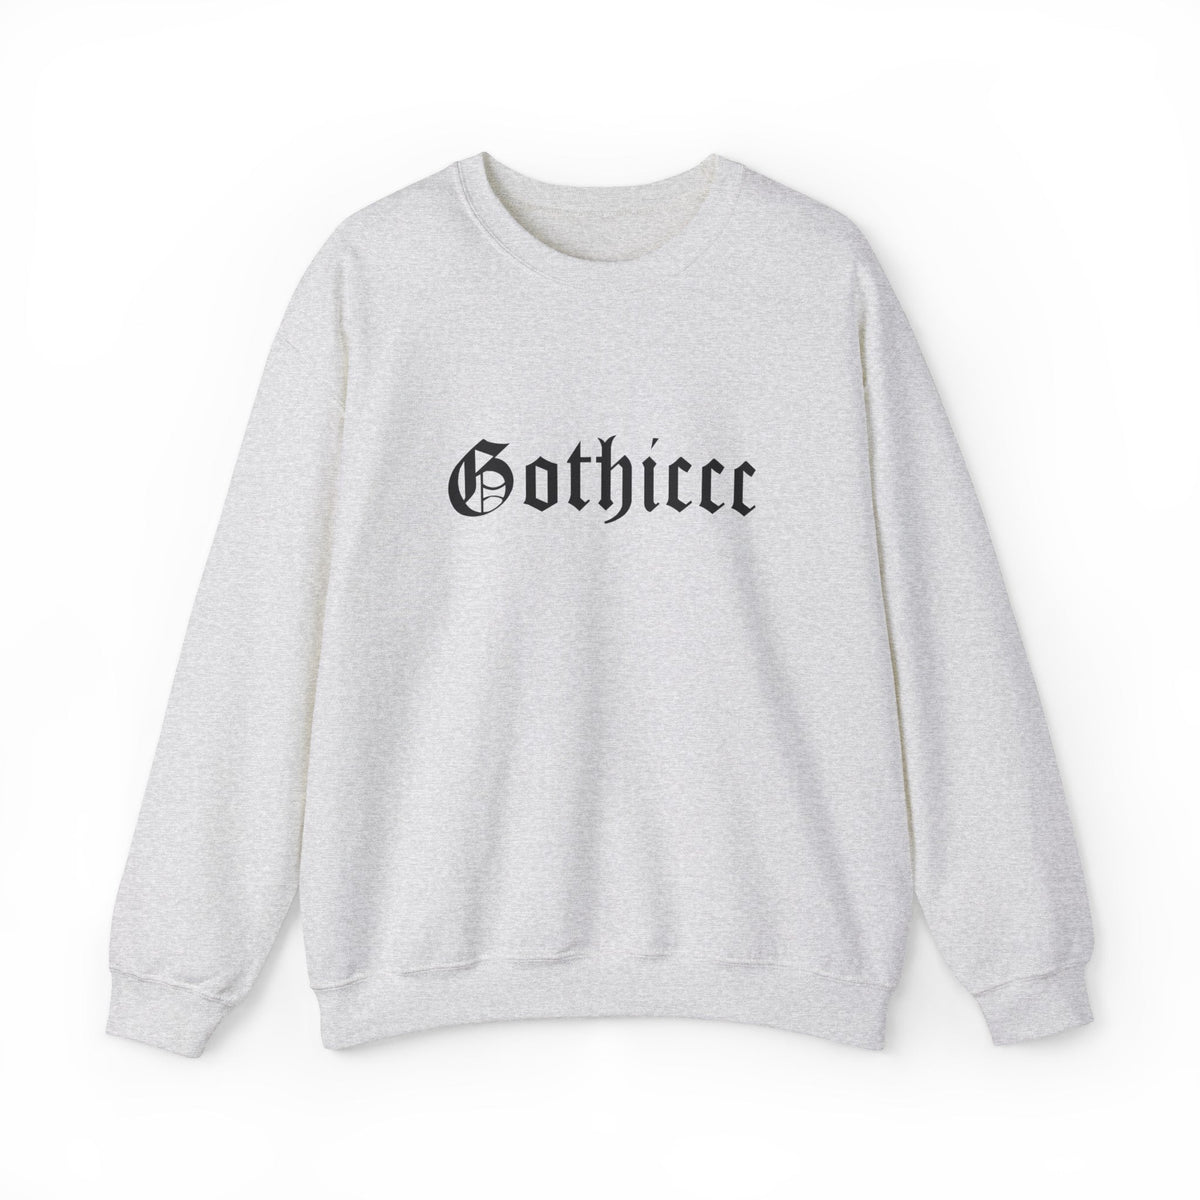 Gothiccc Long Sleeve Crew Neck Sweatshirt - Goth Cloth Co.Sweatshirt14563303329413045700